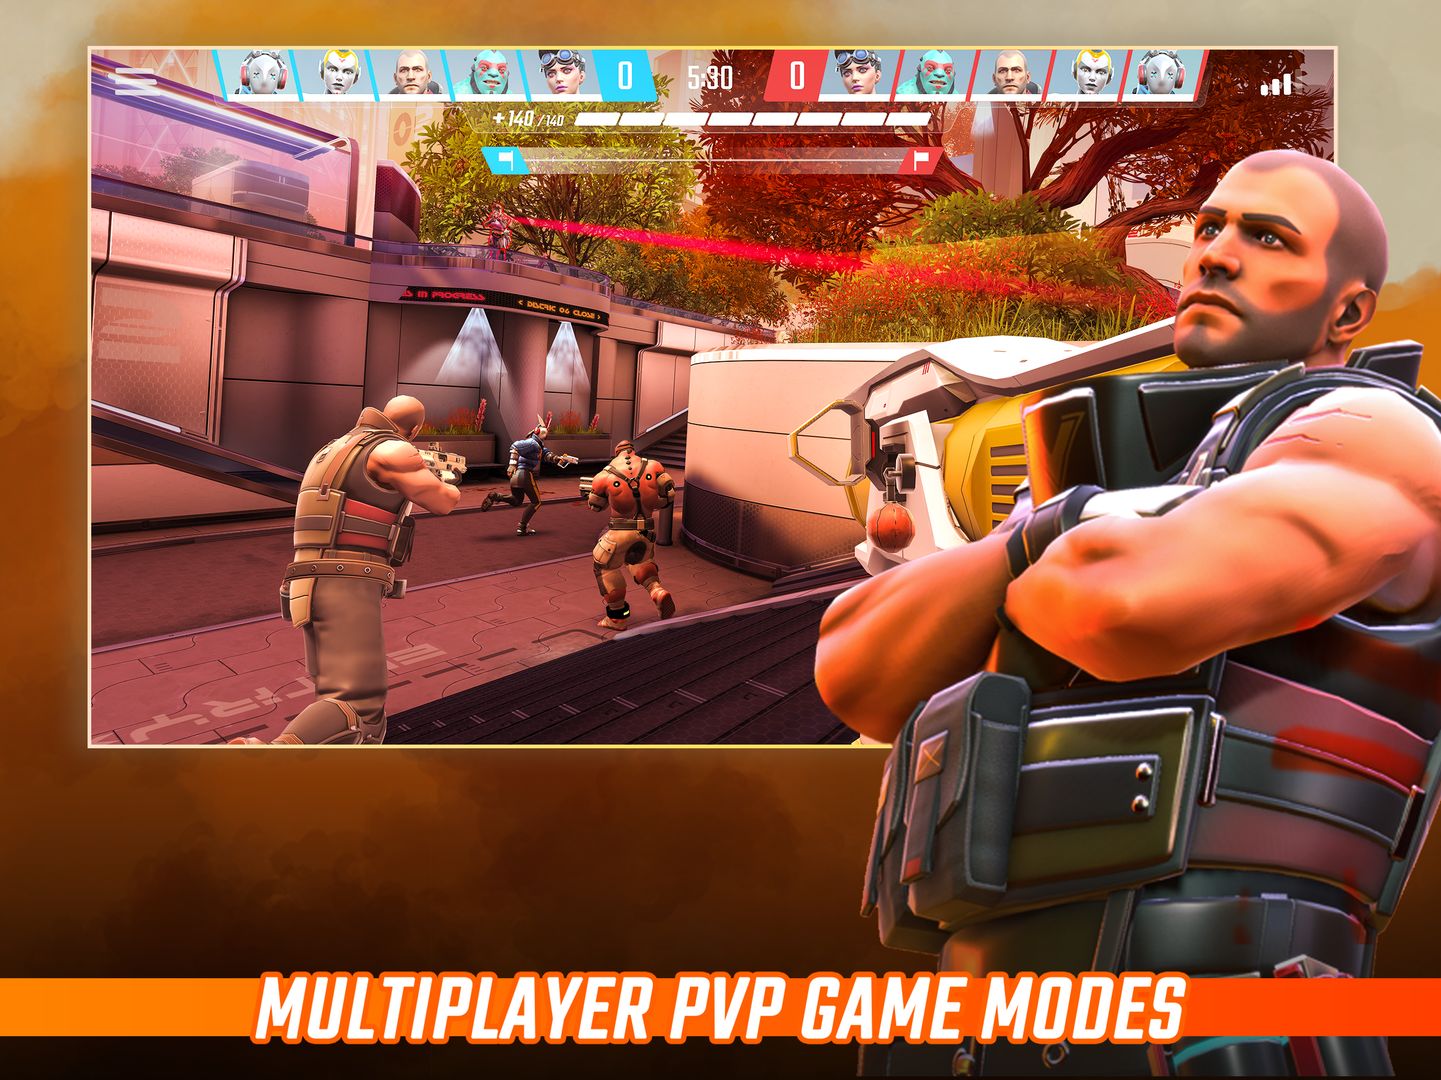 Screenshot of Shadowgun War Games